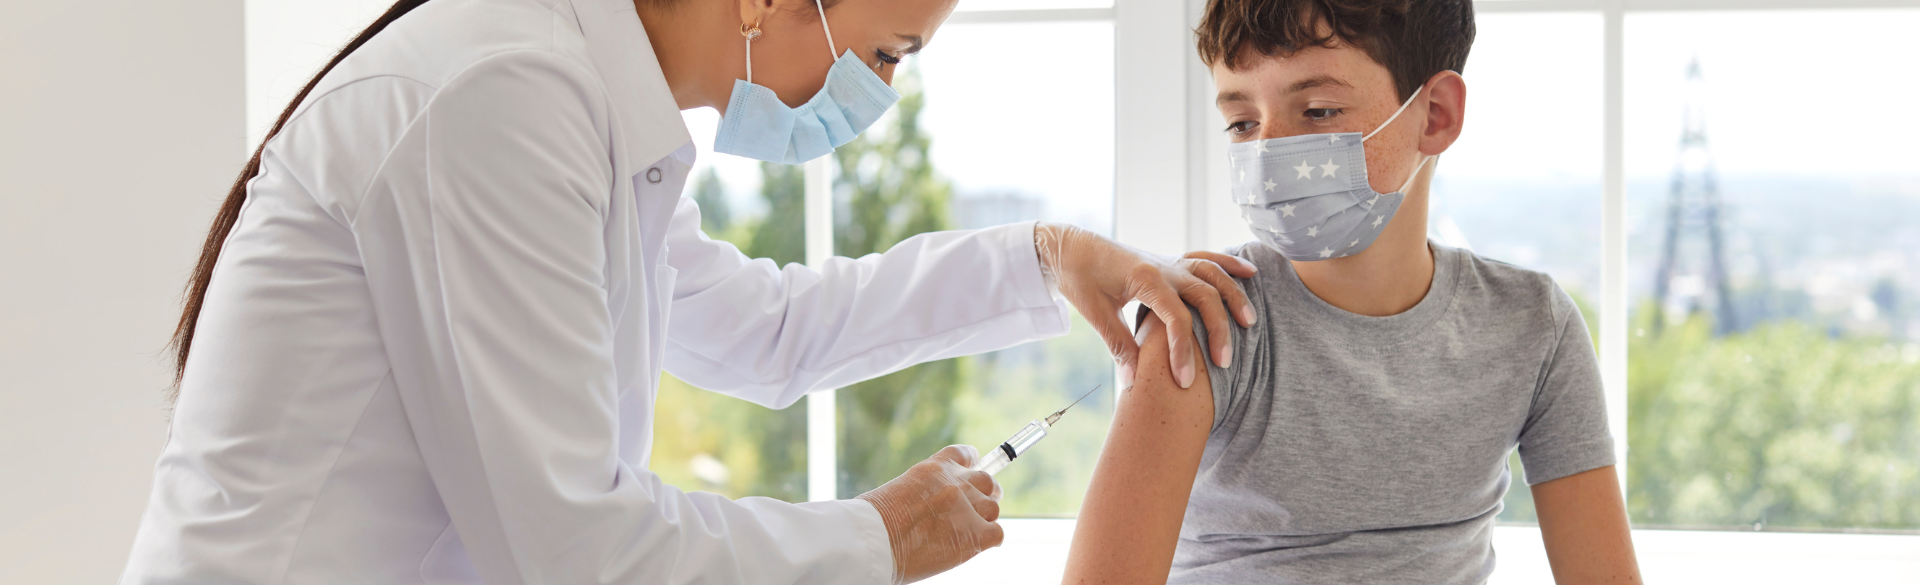 child receiving vaccine shot